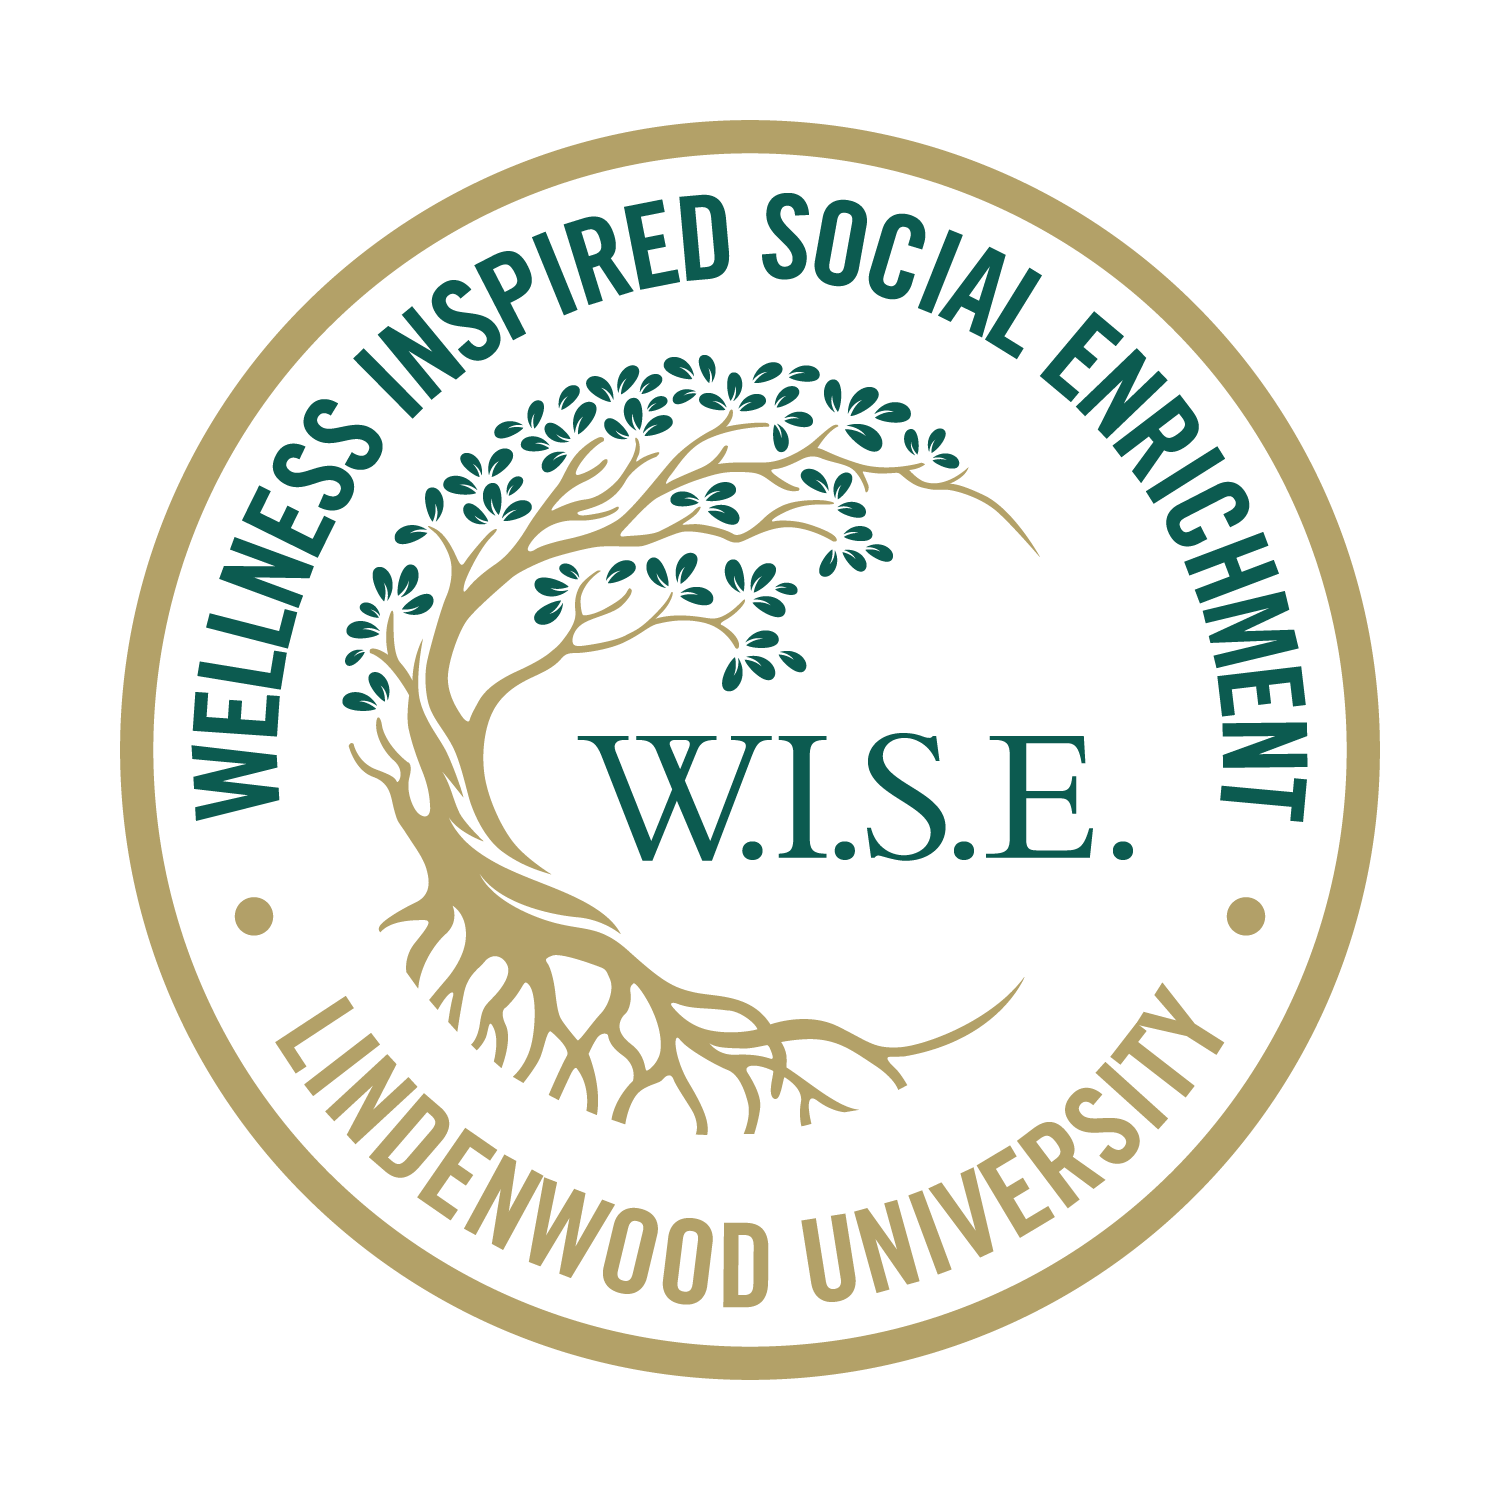 W.I.S.E Program - Wellness Inspired Social Enrichment